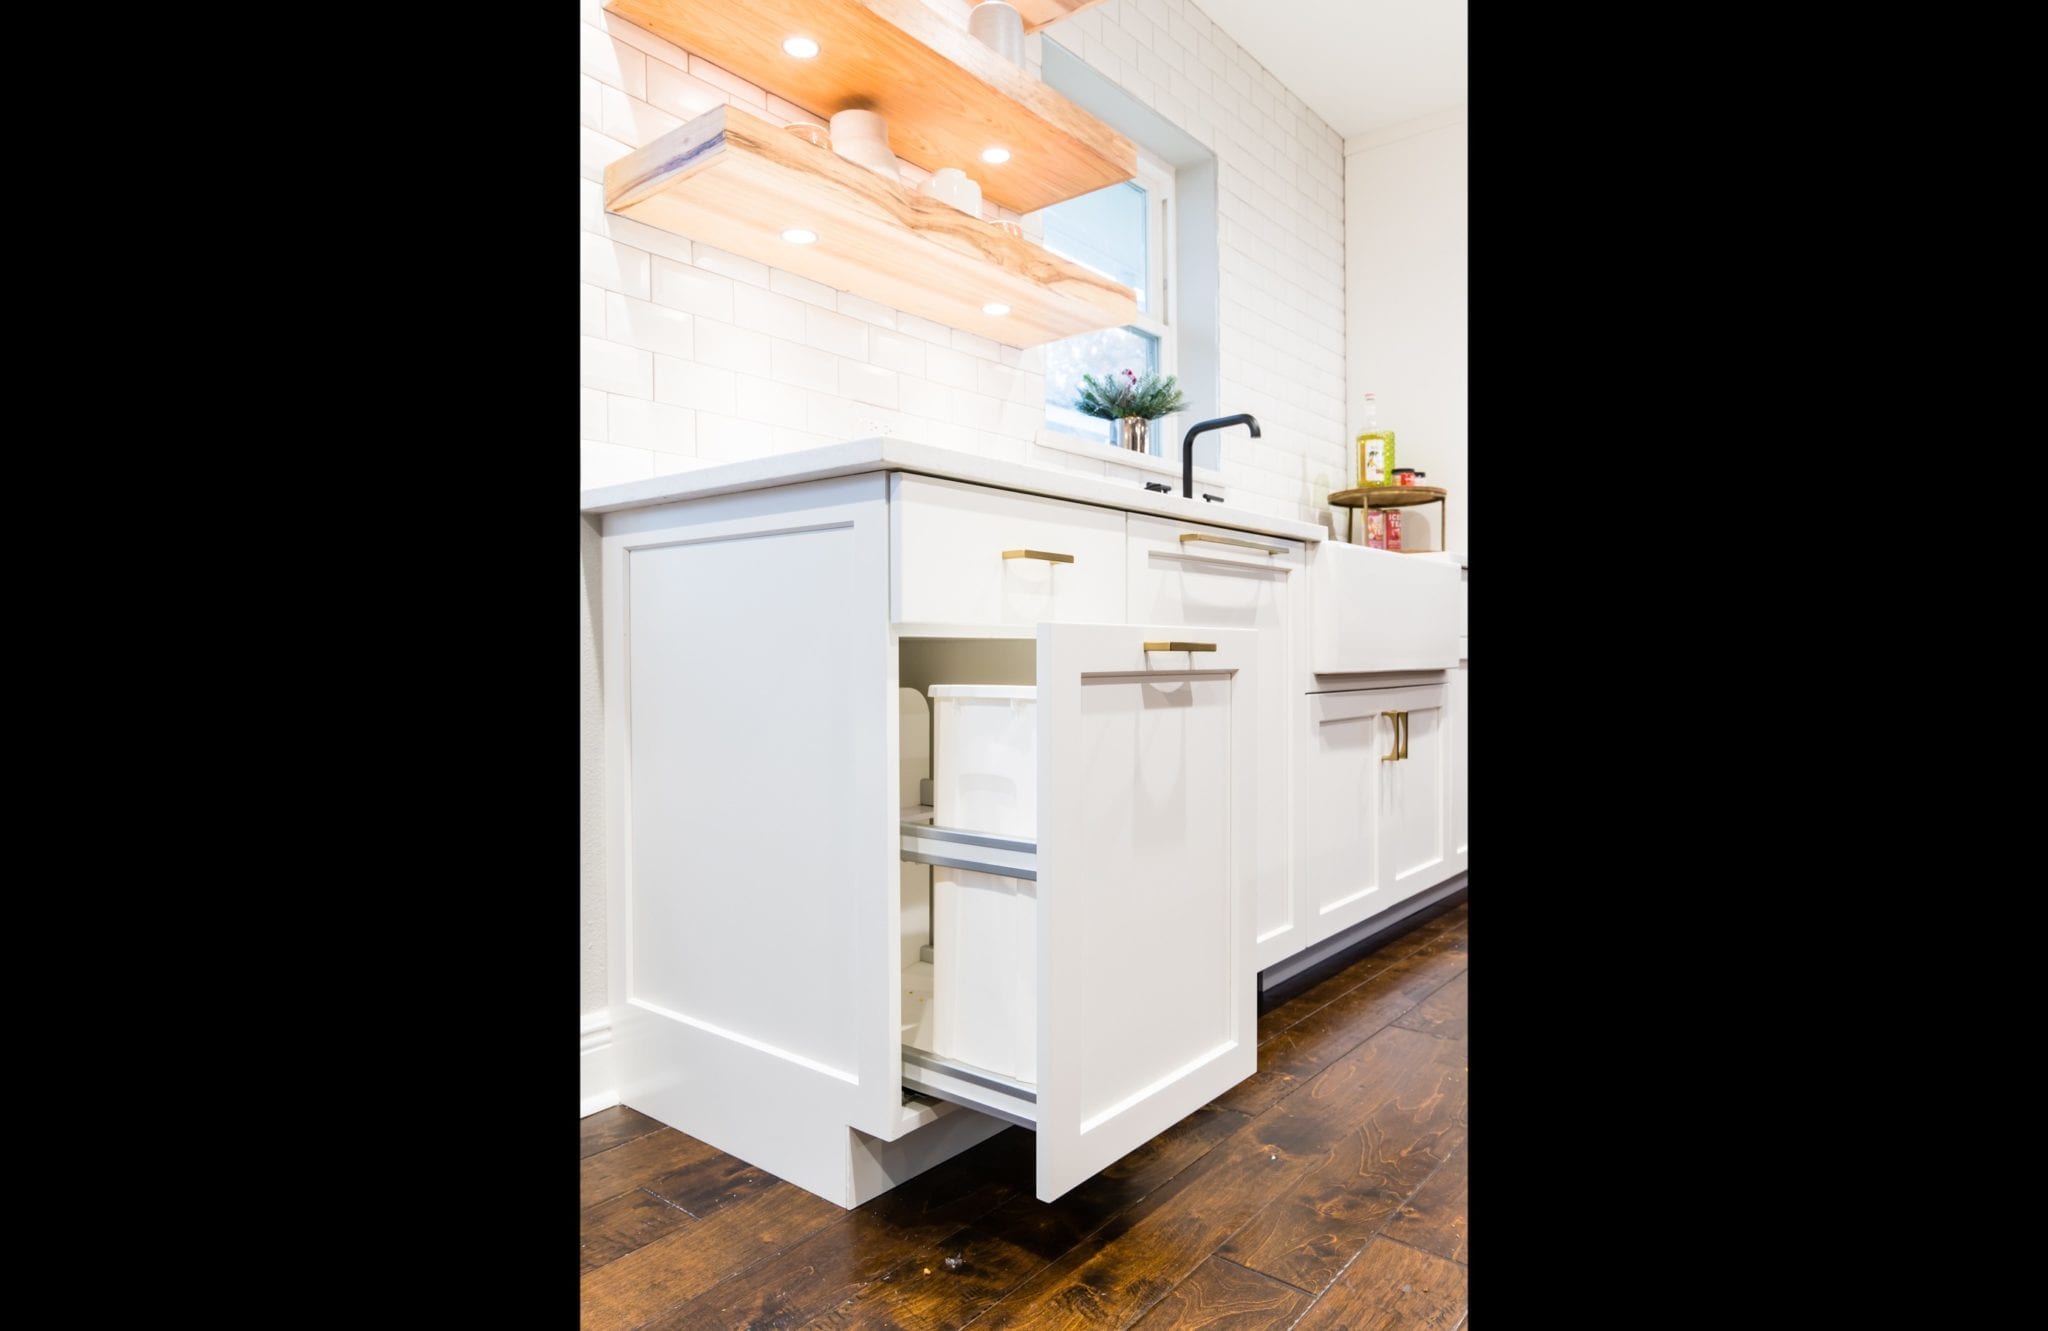 Single-Family-Home-Kitchen-Remodel-Custom-Cabinets-Backsplash-New-Wood-Floors-Trash-Storage-Open-Shelves-Undershelf-Lighting-HighlandMeadows-75238_2